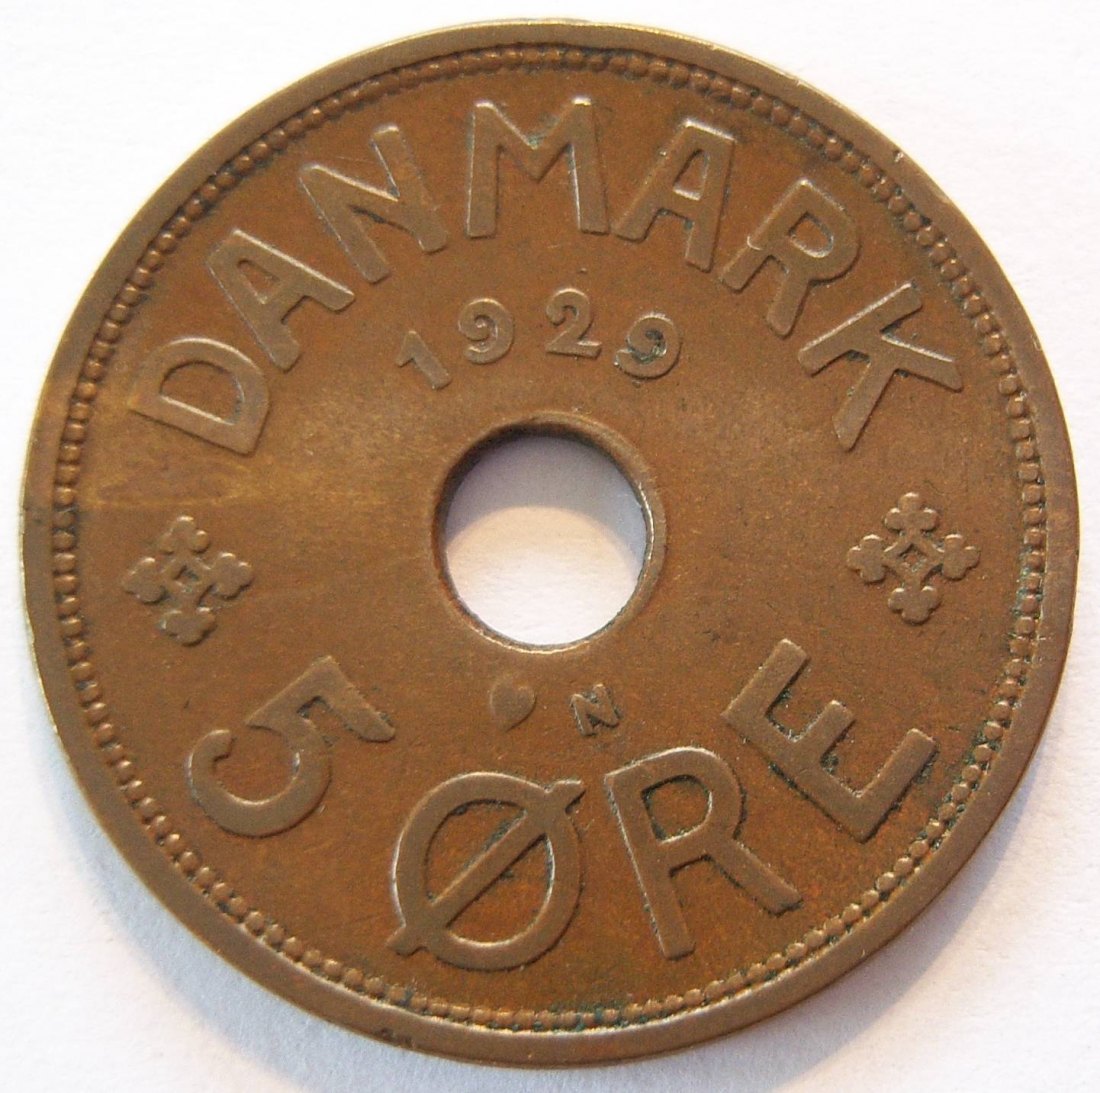  Dänemark 5 Öre 1929   